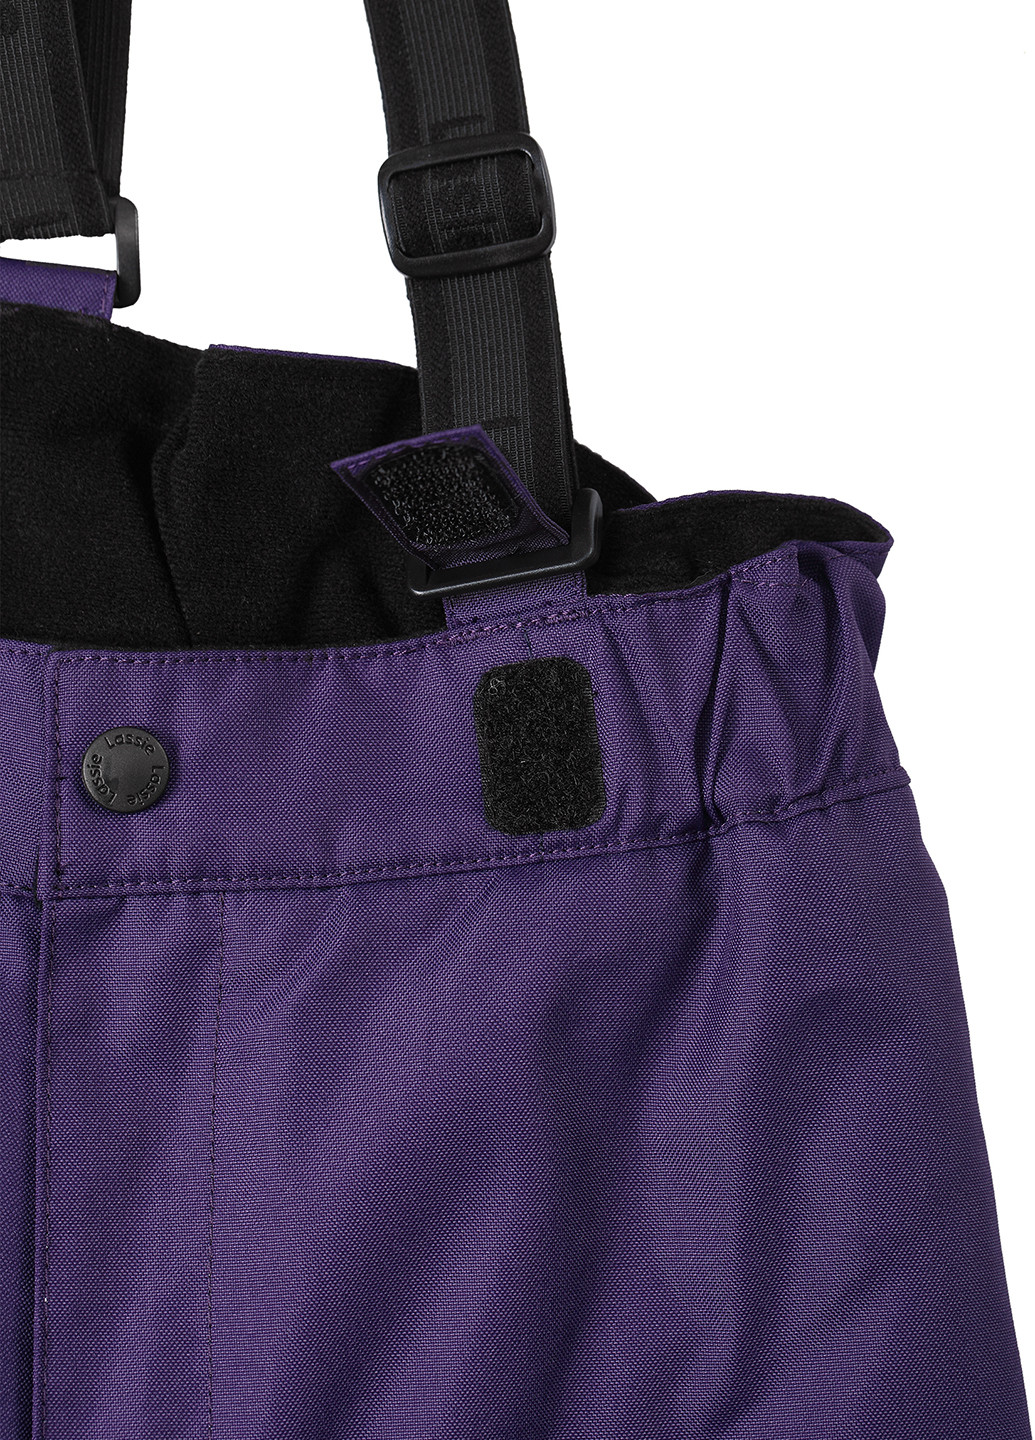 Фиолетовый зимний комплект (куртка, брюки) Lassie by Reima